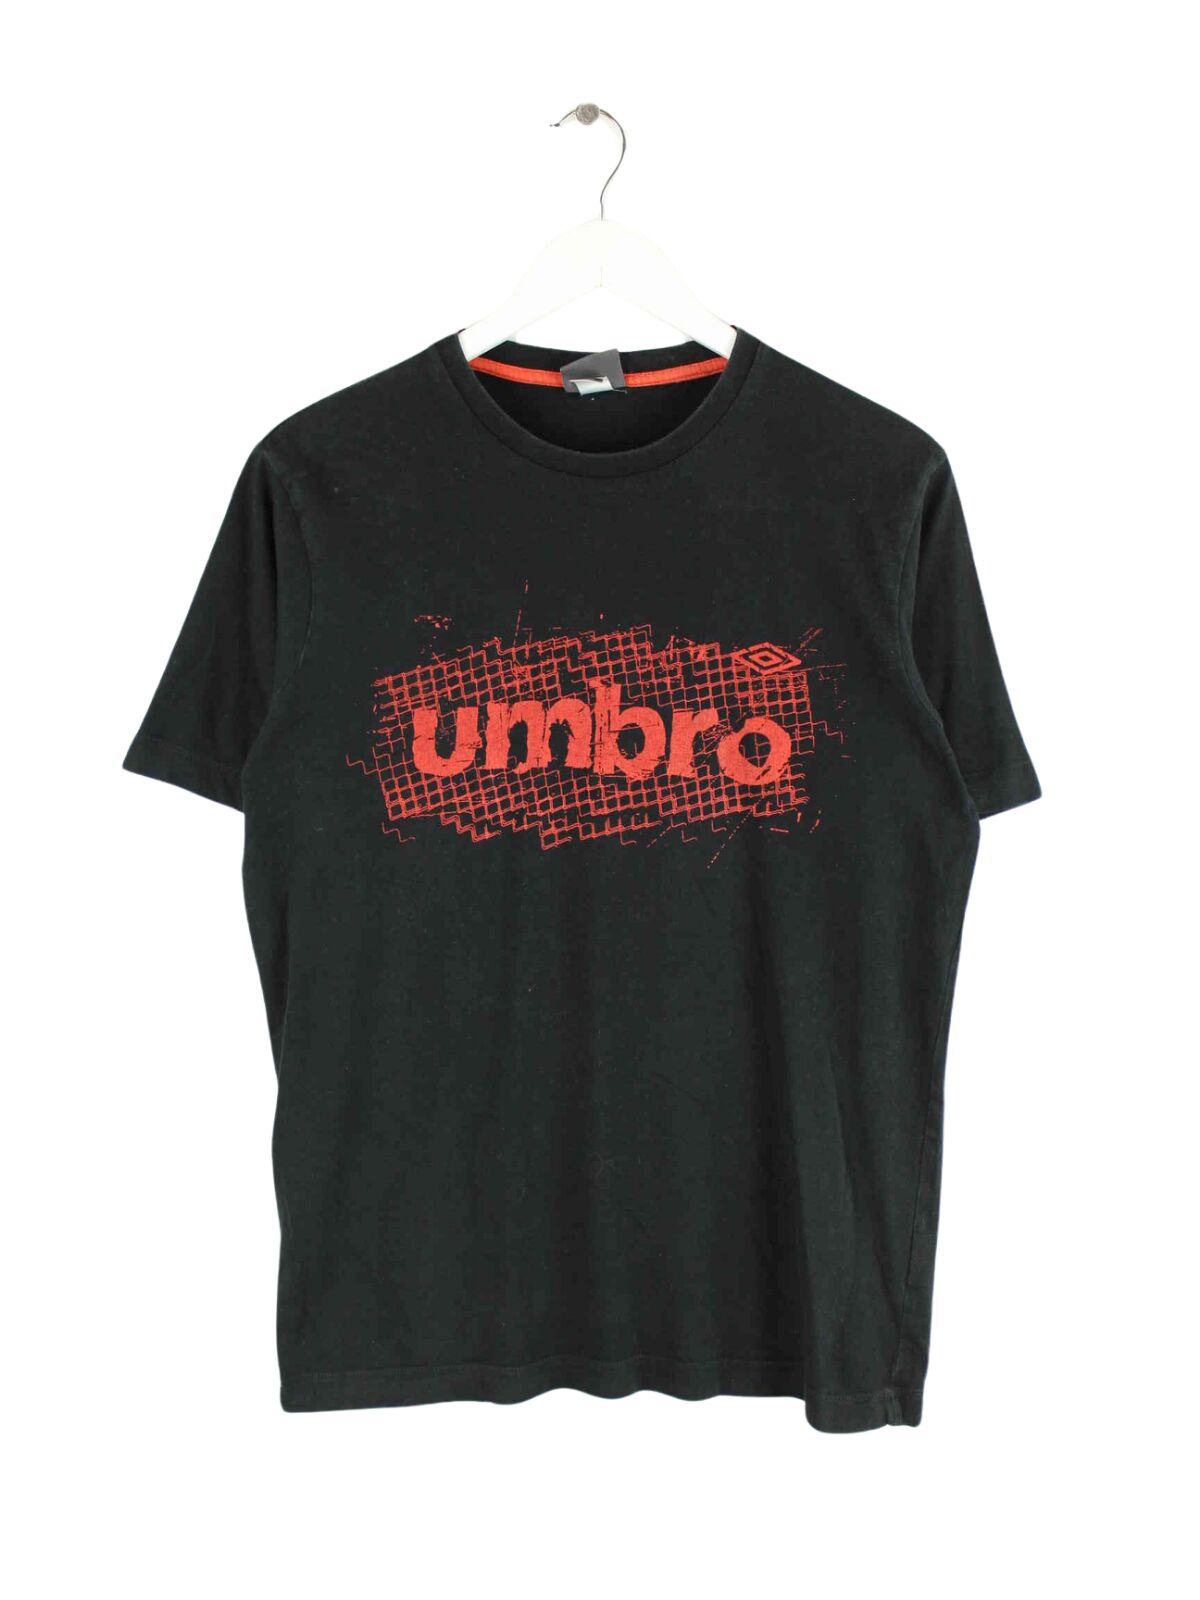 Umbro y2k Logo Print T-Shirt Schwarz S (front image)